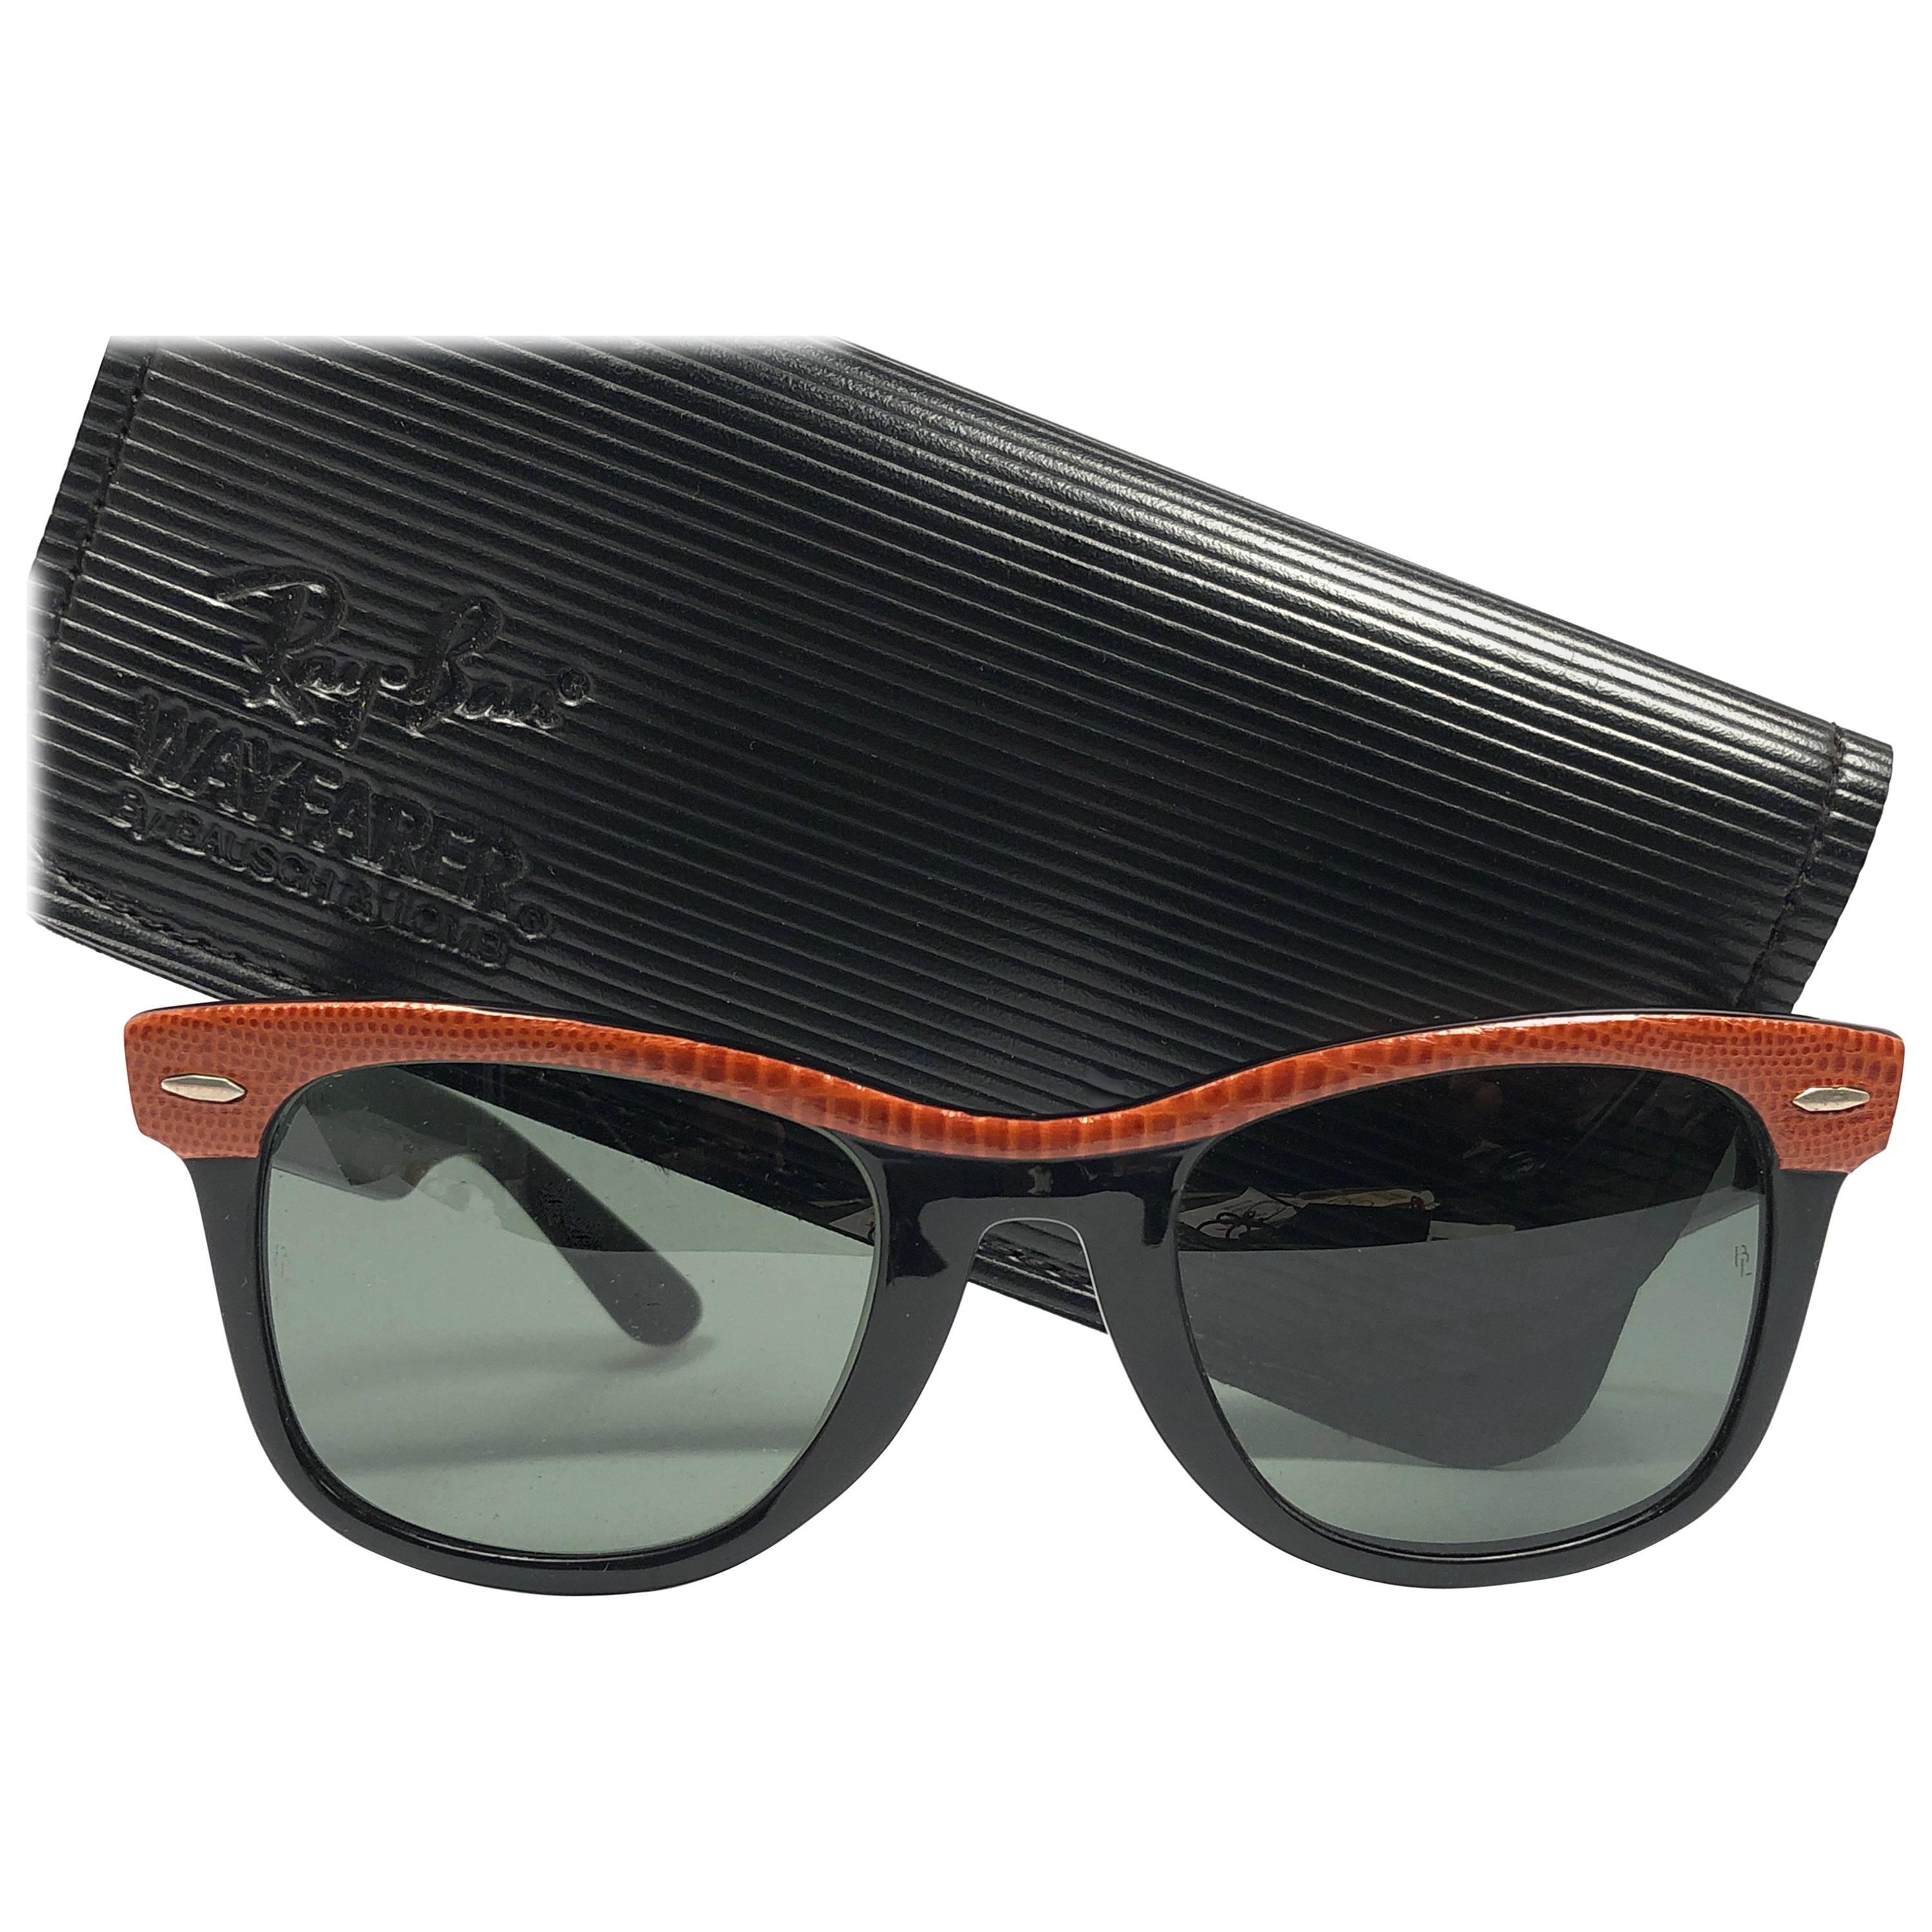 New Ray Ban The Wayfarer Orange Leather G15 Grey Lenses USA 80's Sunglasses